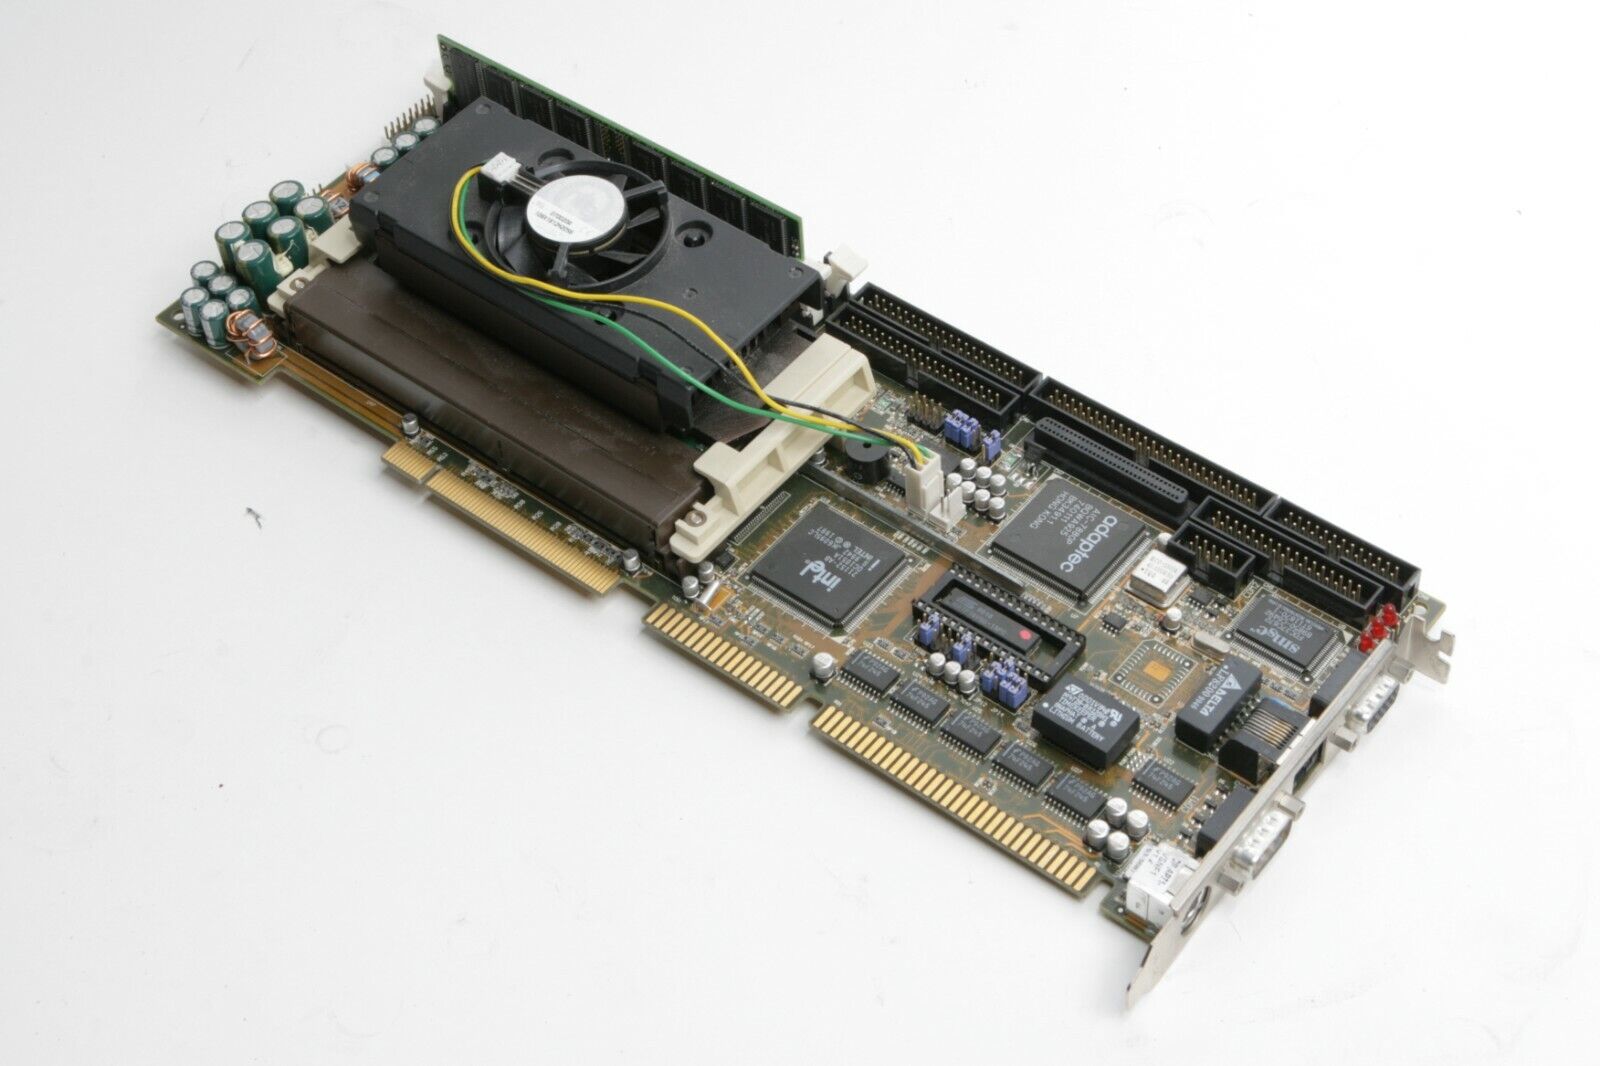 IEI CP-AP71-VSNF1 SBC Single Board Computer, Industrial Motherboard with Intel